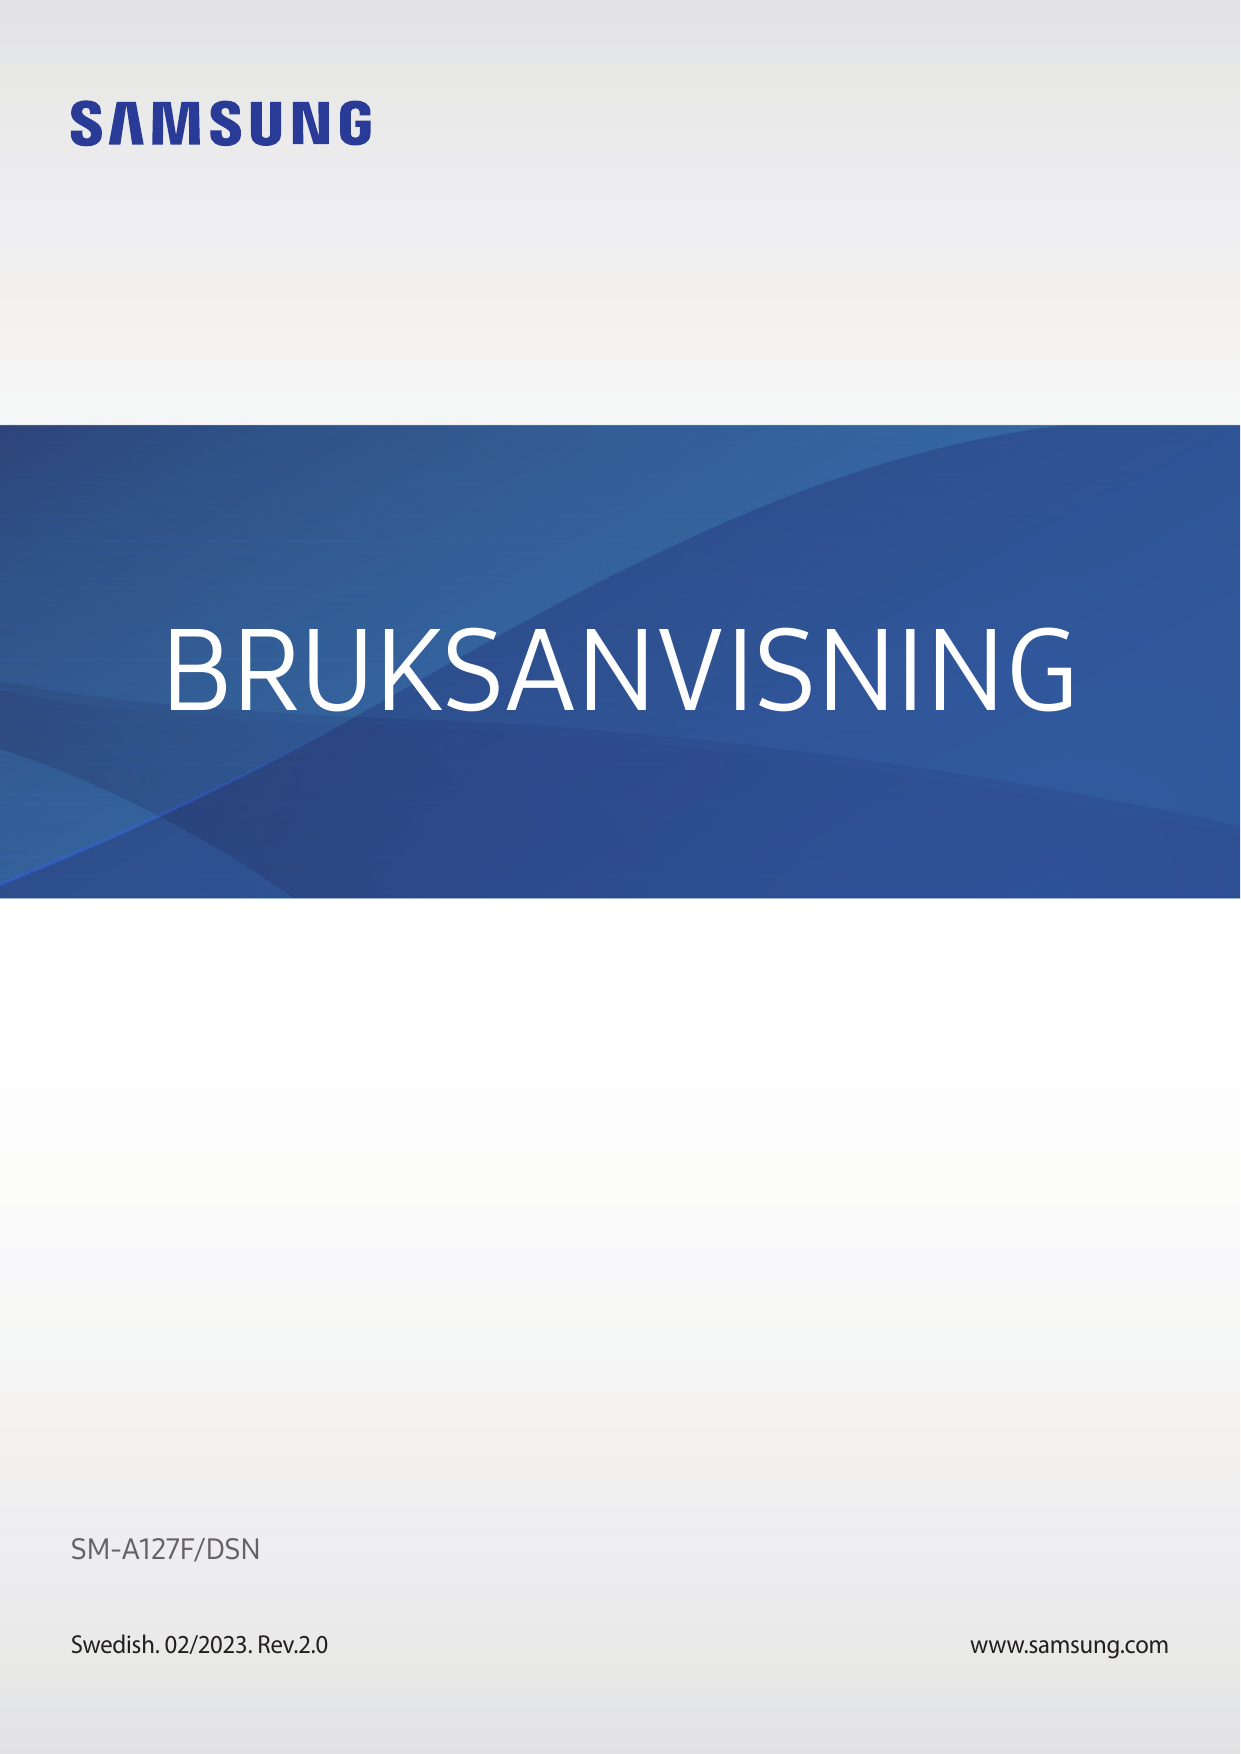 BRUKSANVISNINGSM-A127F/DSNSwedish. 02/2023. Rev.2.0www.samsung.com